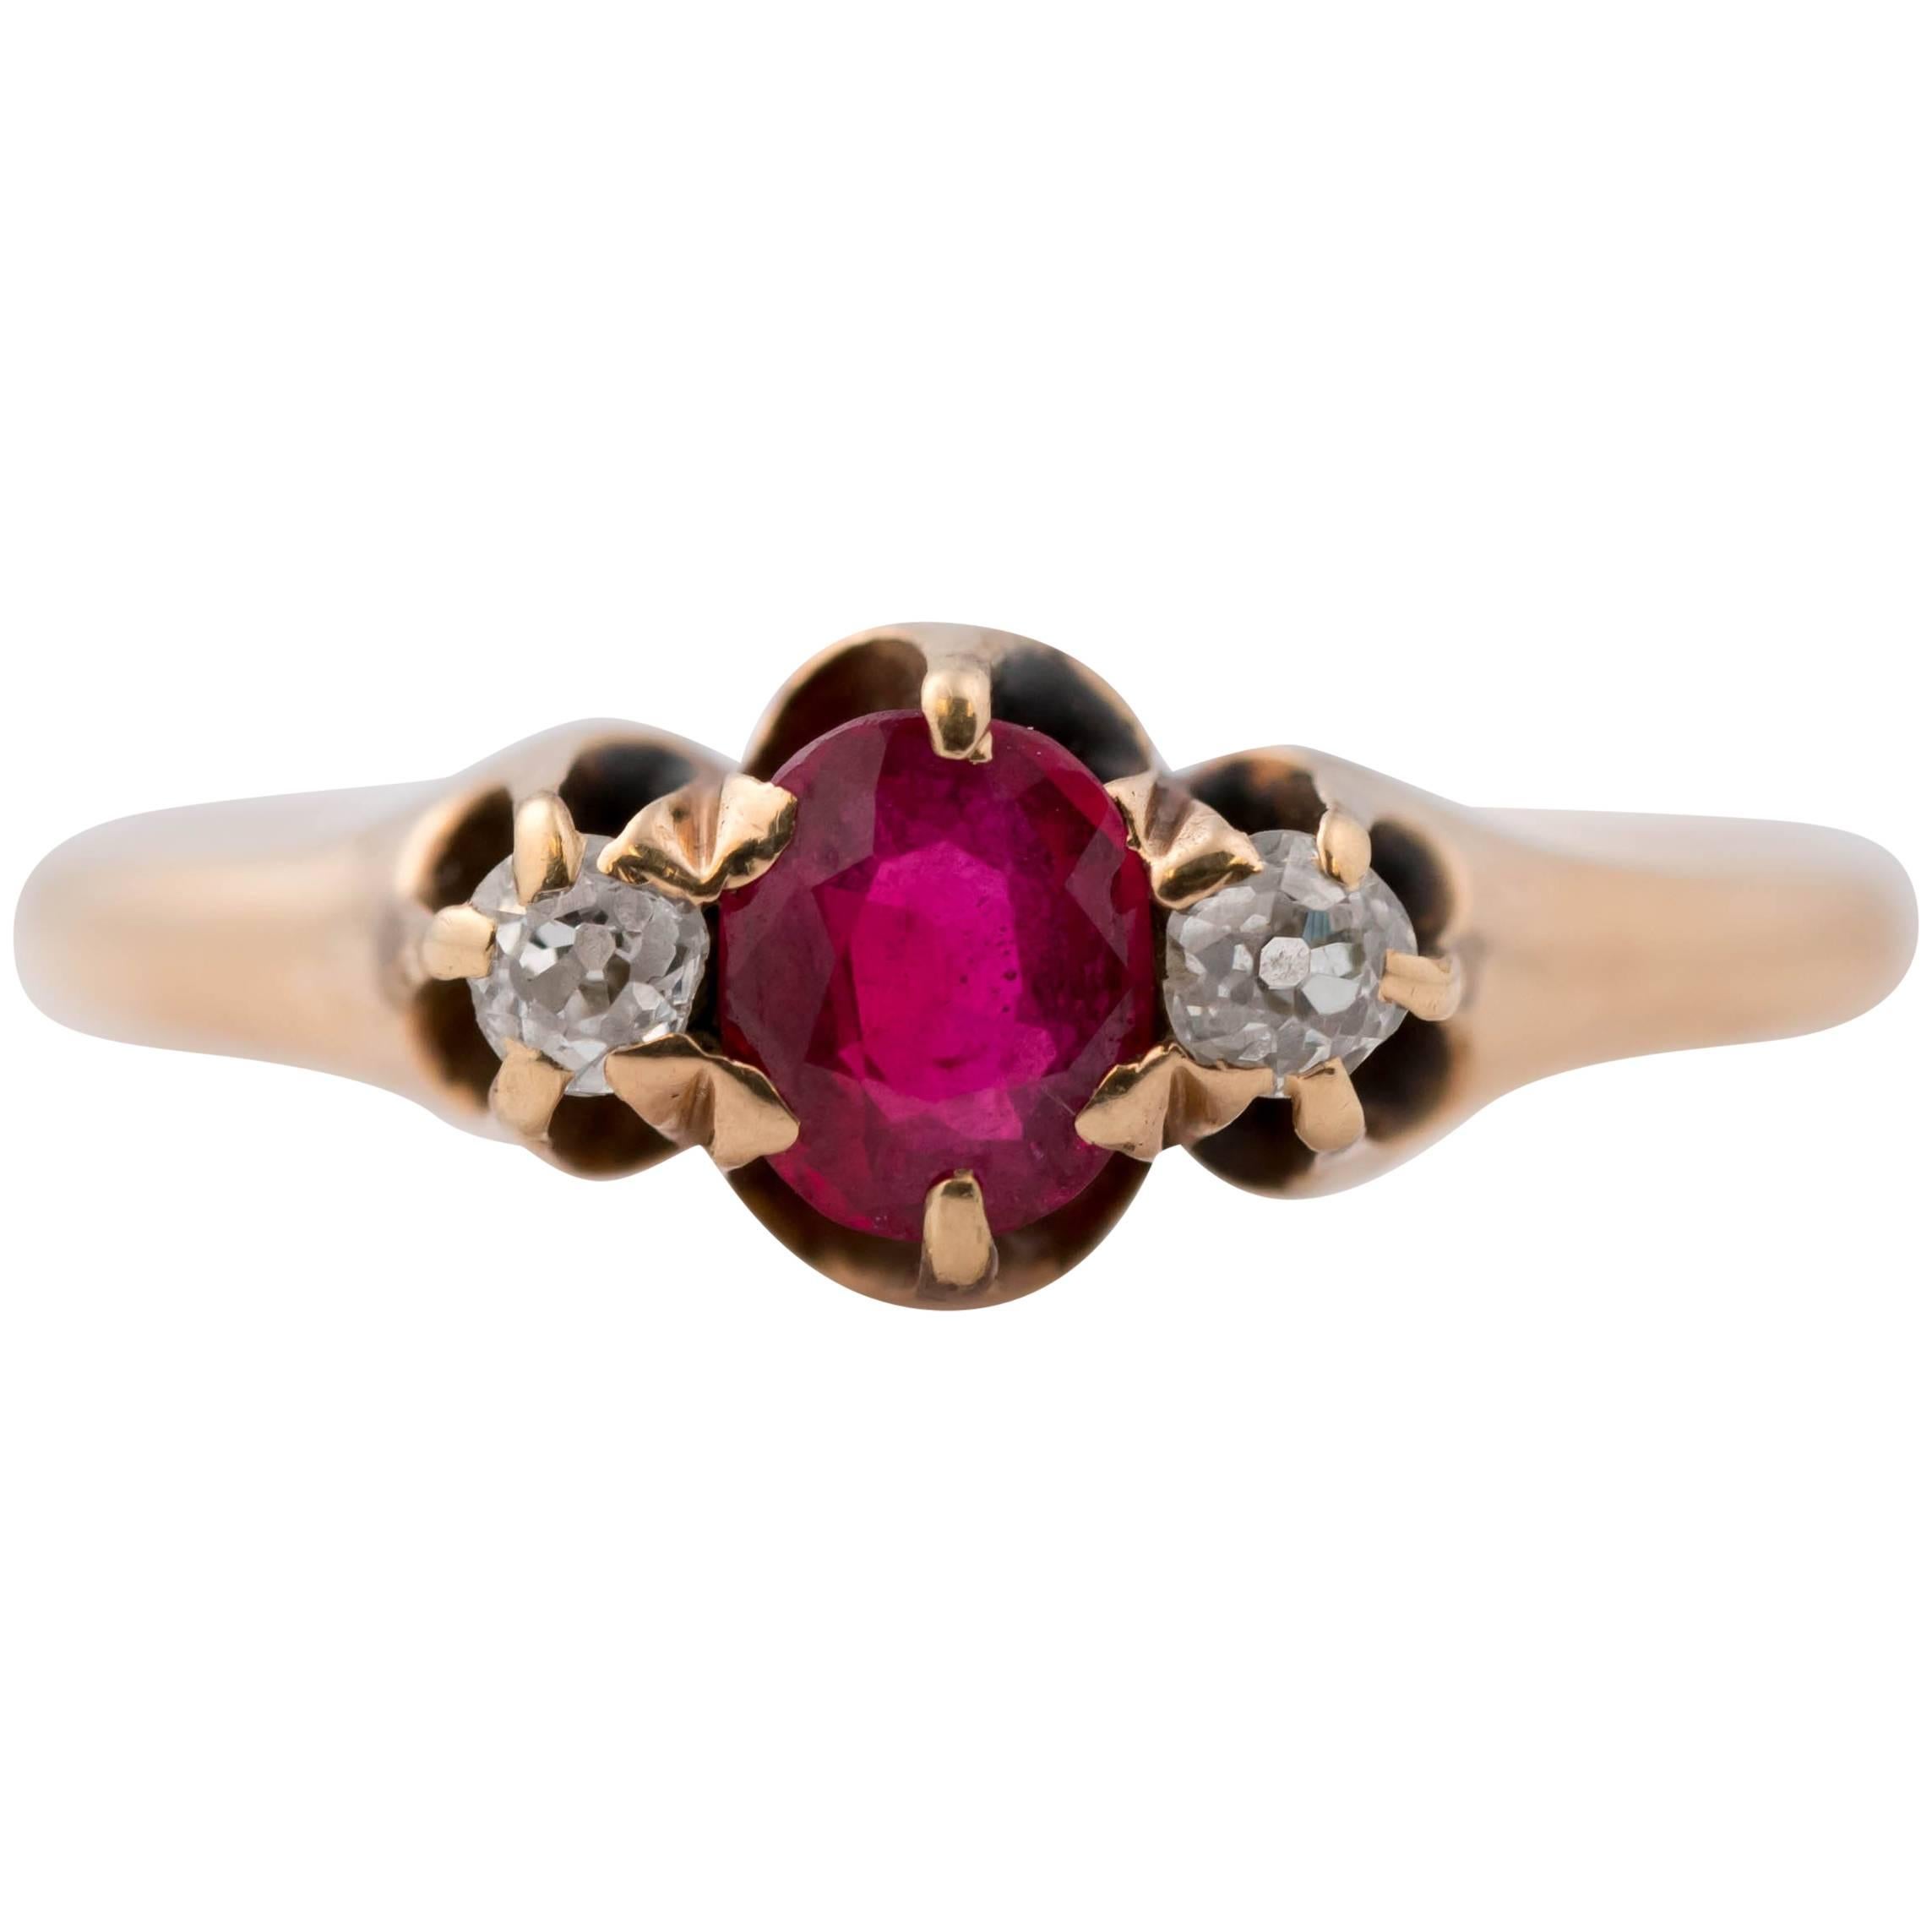 1890s .50 Carat Ruby and Diamond 14 Karat Gold Ring